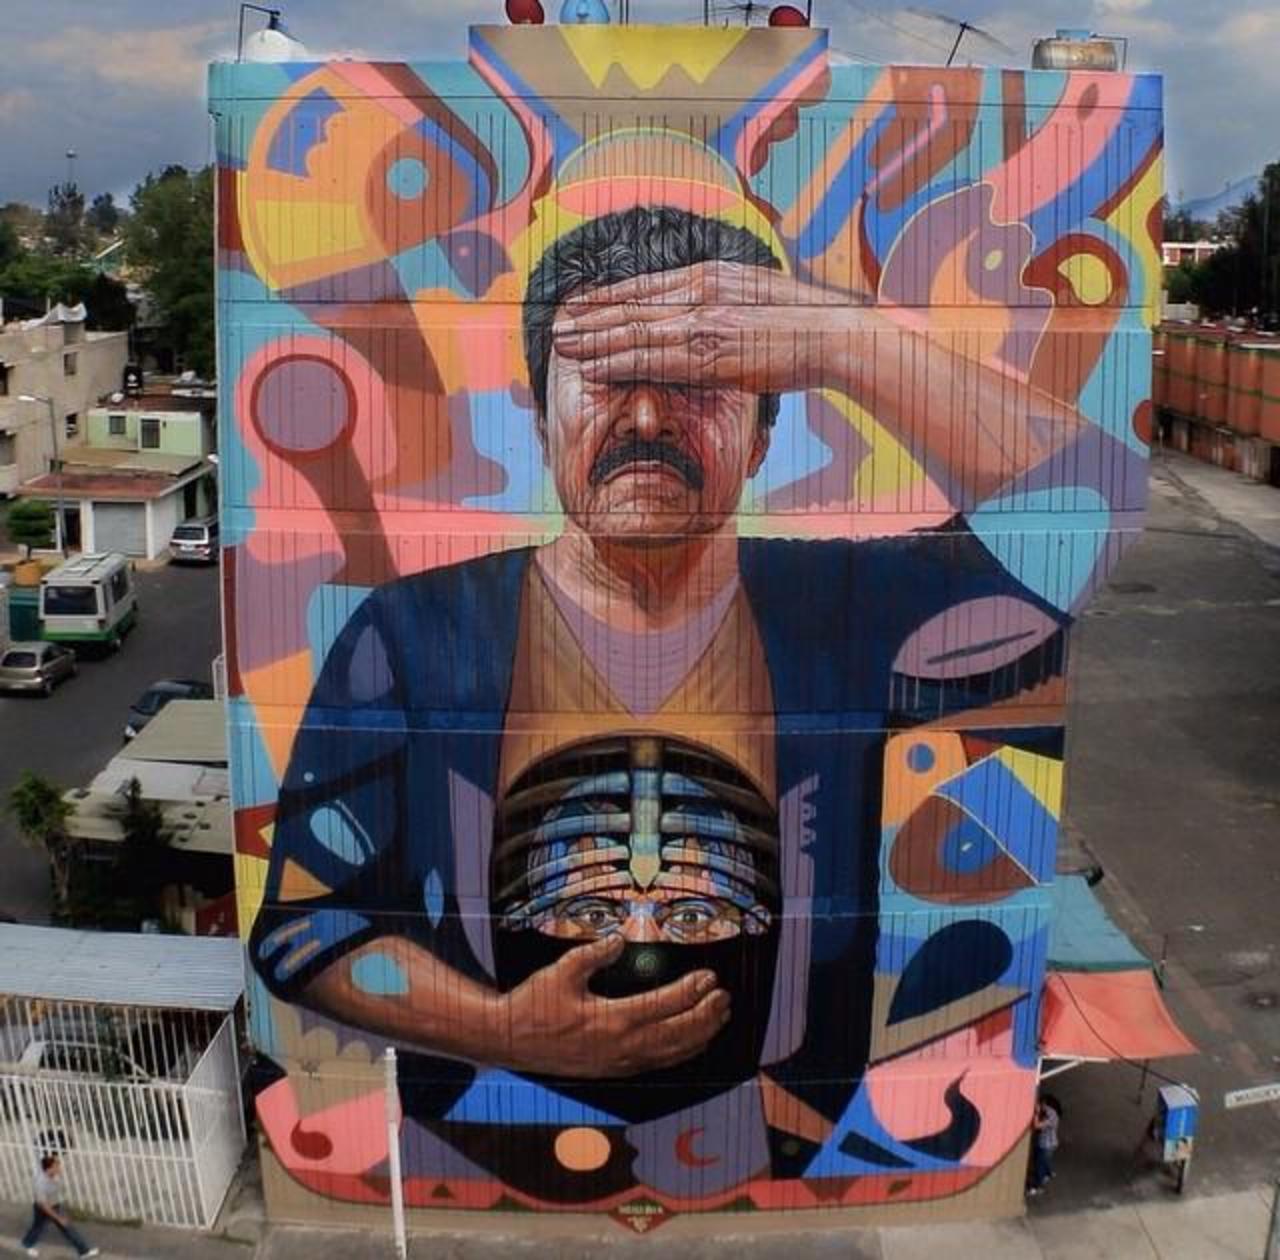 Sistemas4s: Large scale Street Art by the artist Daniel Cortez 

#art #mural #graffiti #streetart http://t.co/P1TqyxEhJA